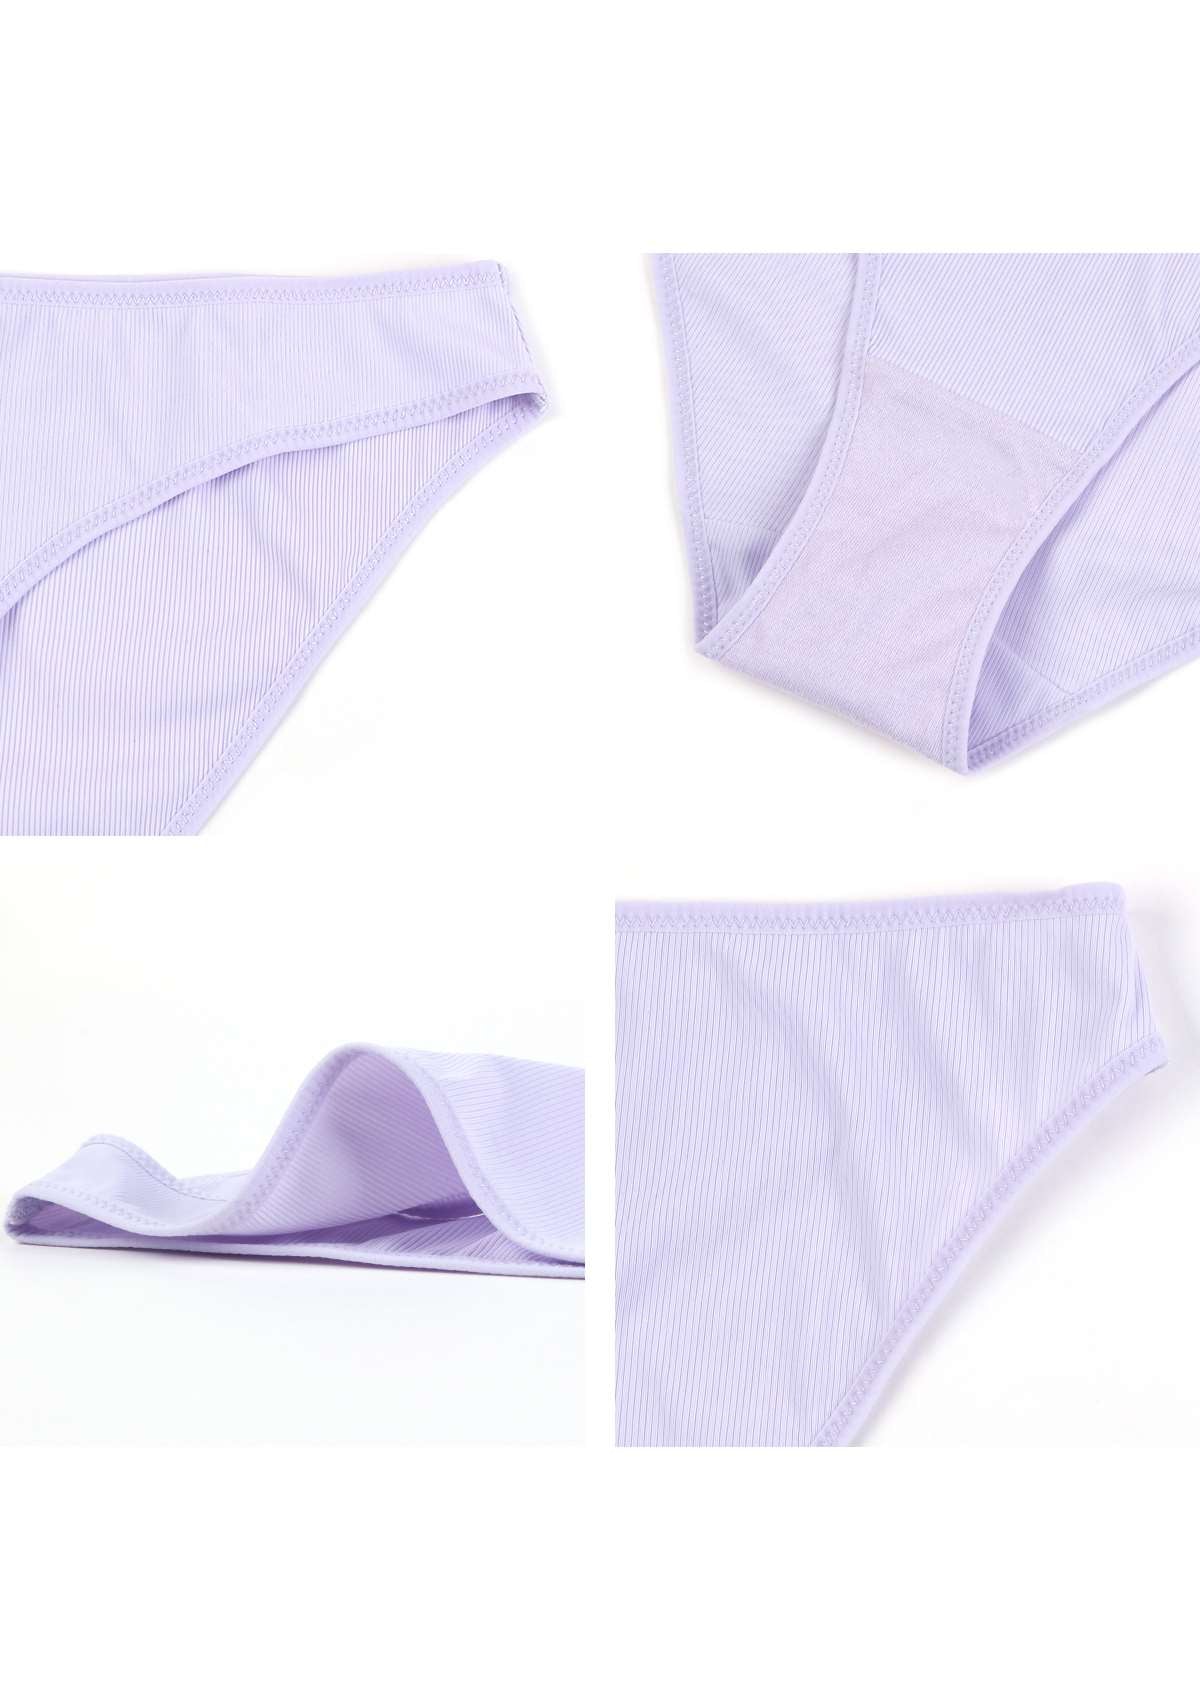 HSIA Ribbed Knit Cotton Bikini Underwear 3 Pack - XL / Black+White+Pink Beige